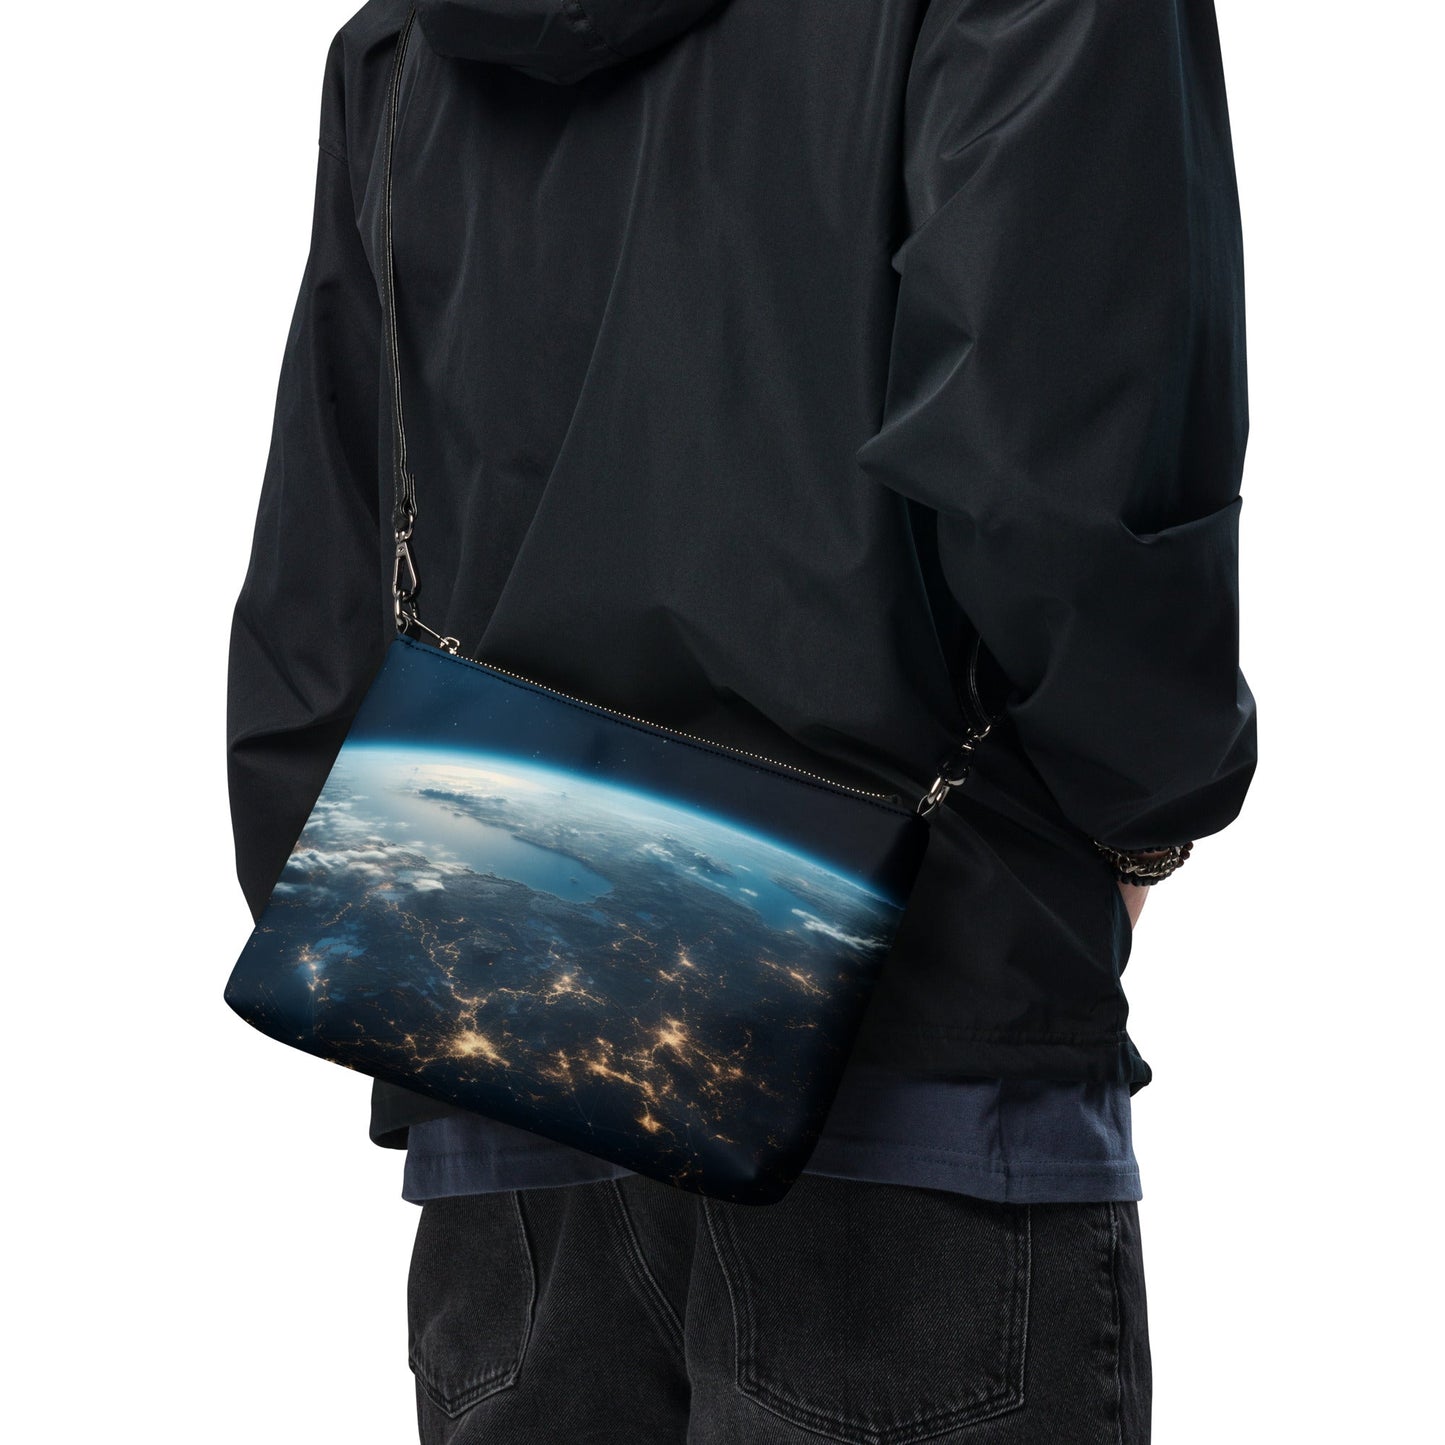 8 BILJON Global Crossbody bag by Neduz Designs